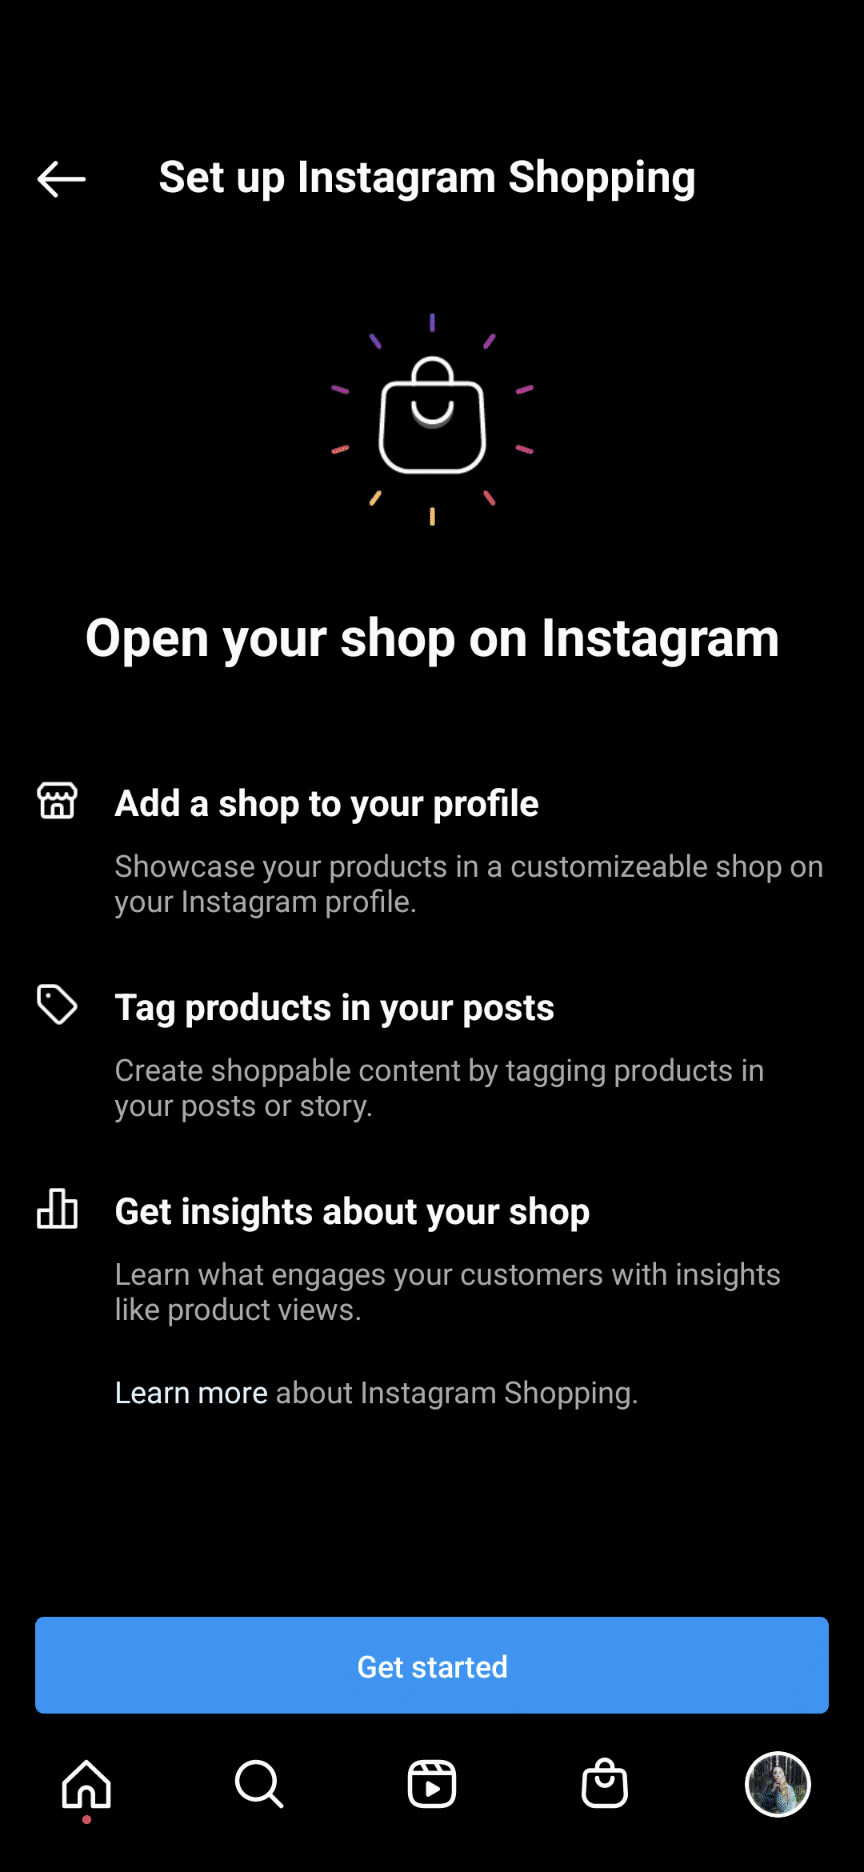 Set up Instagram Shopping